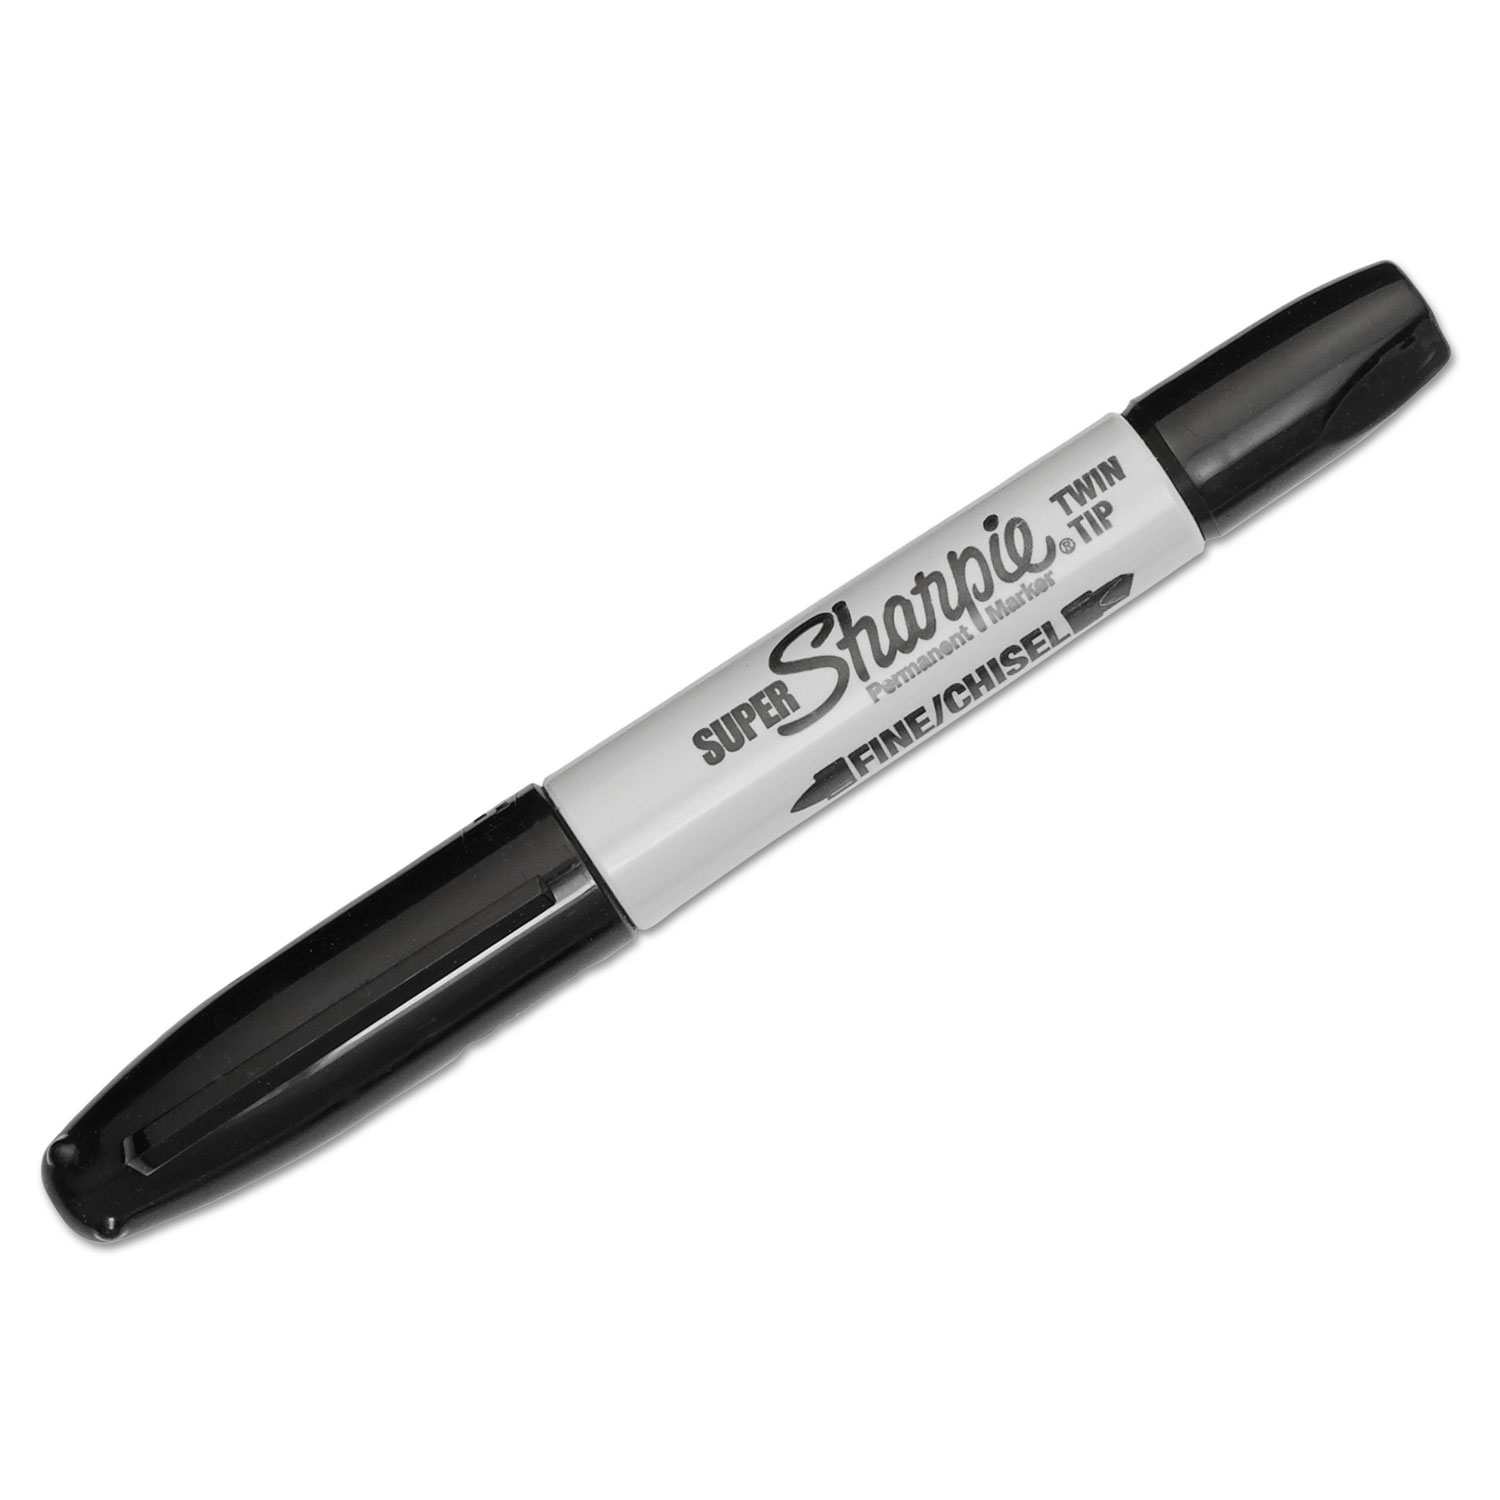  Sharpie 36201 Super Twin-Tip Permanent Marker, Medium/Broad Bullet/Chisel Tips, Black (SAN36201) 